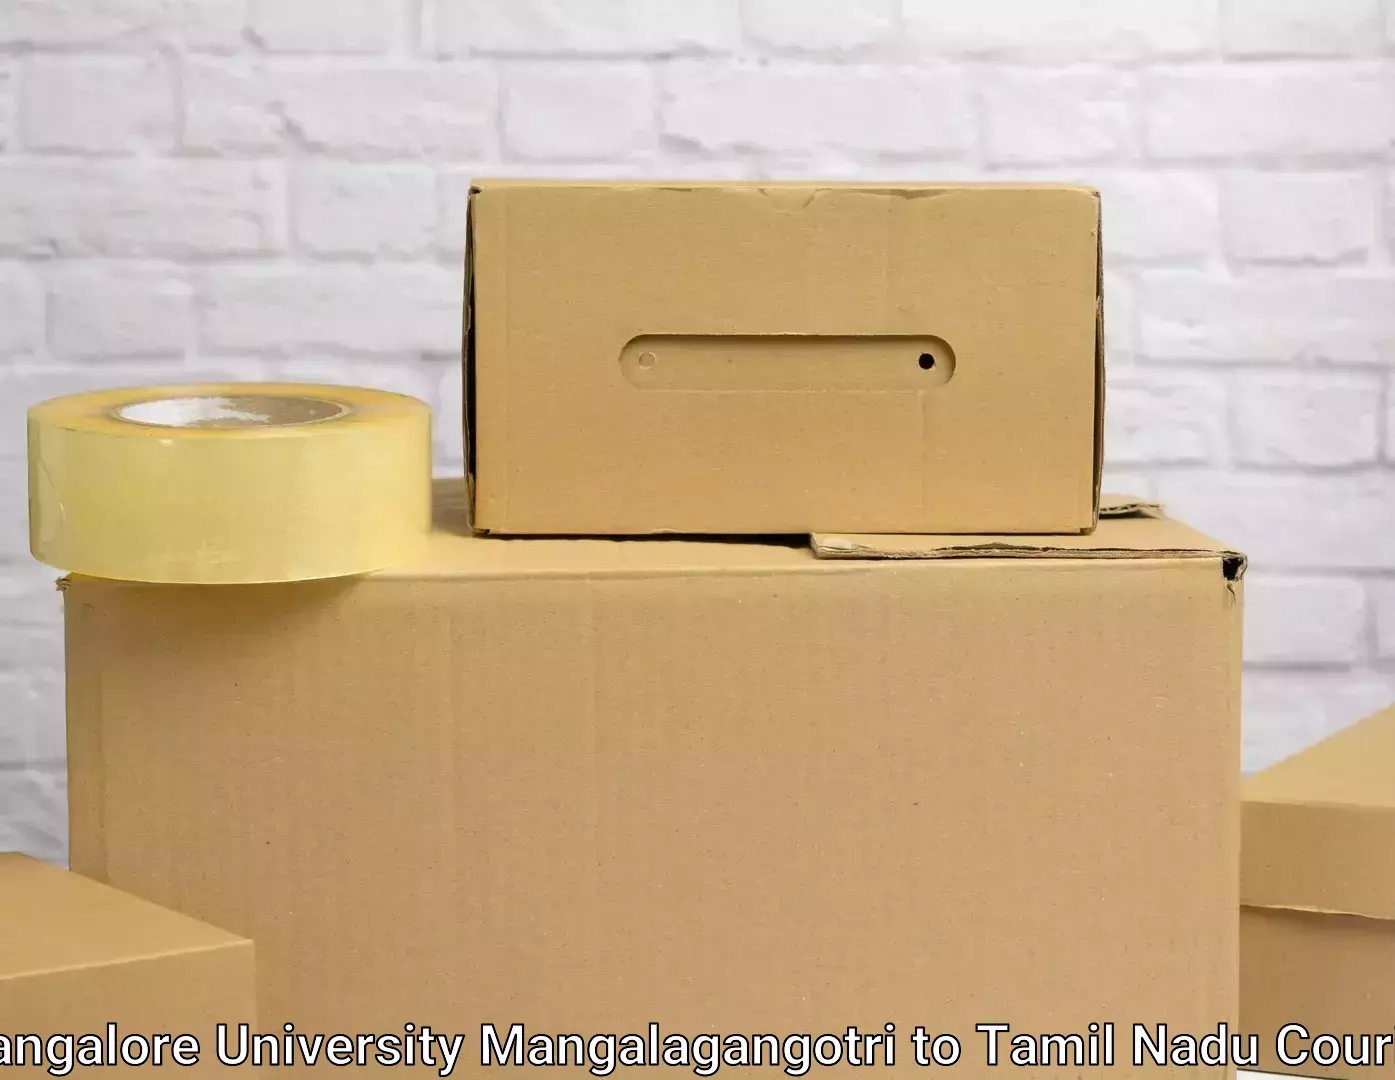 Furniture moving experts Mangalore University Mangalagangotri to Ariyalur